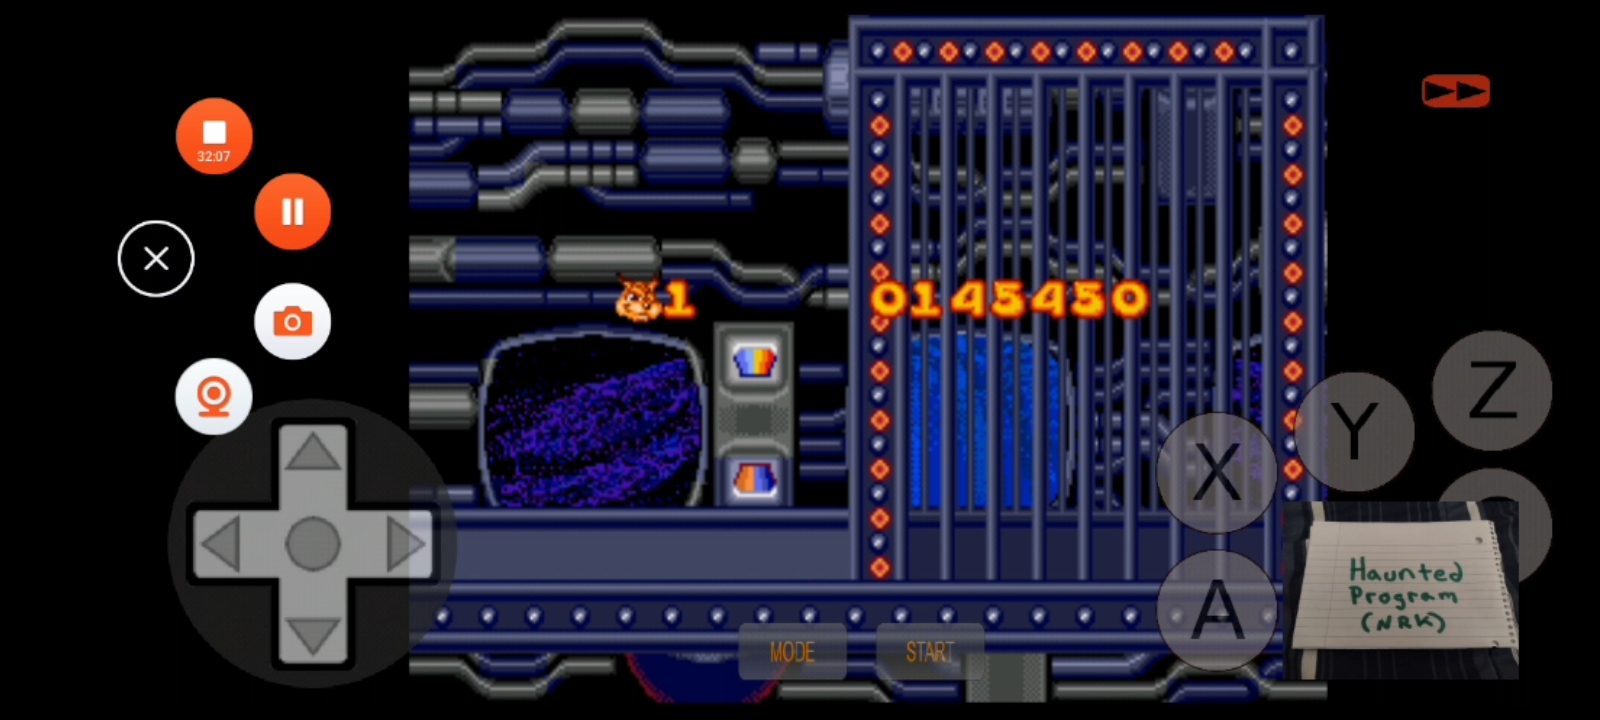 Hauntedprogram: Bubsy II (Sega Genesis / MegaDrive Emulated) 145,450 points on 2022-10-21 19:35:42